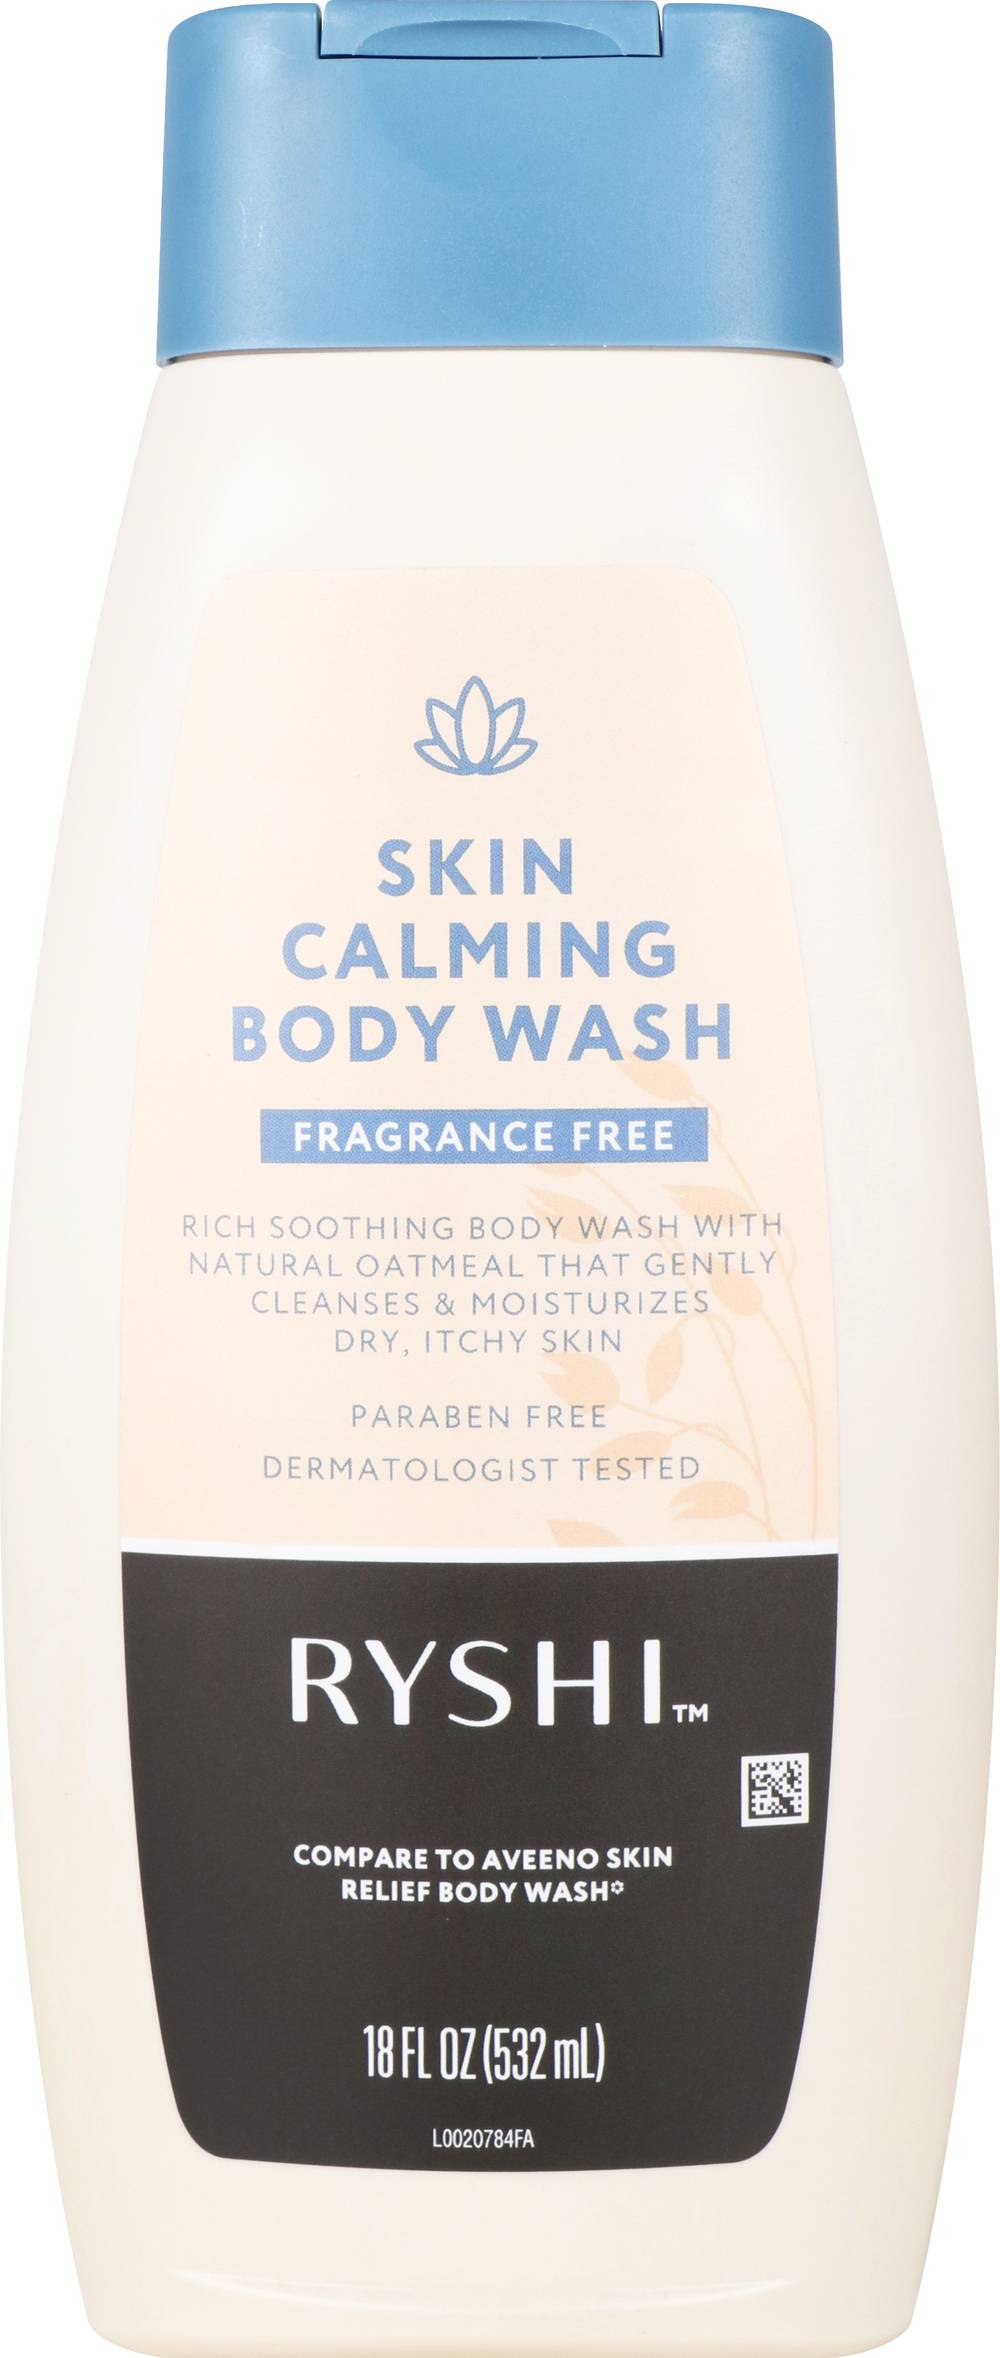 Ryshi Skin Calming Body Wash - Fragrance Free, 18 fl oz